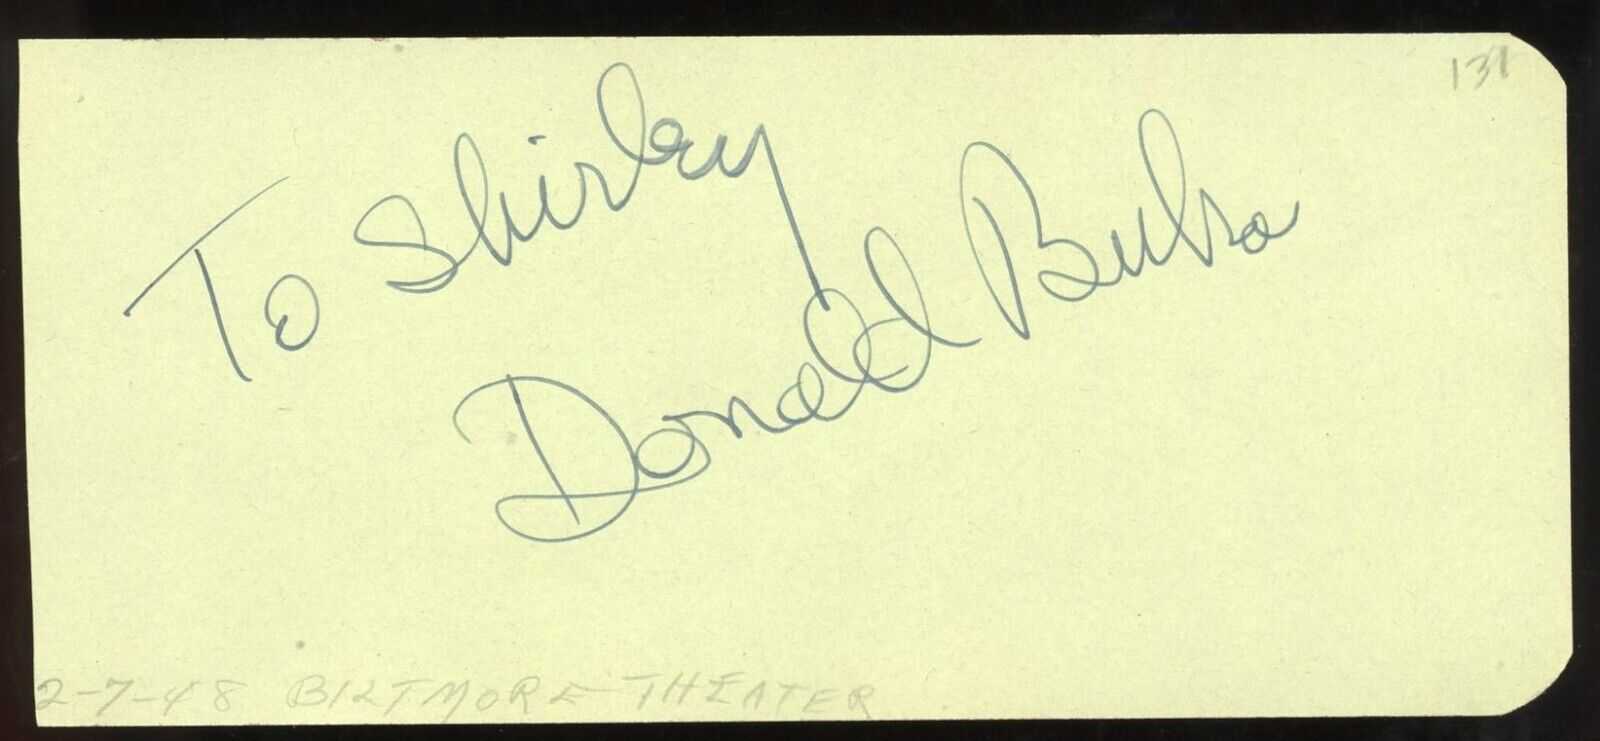 Donald Buka d2009 signed 2x5 cut autograph on 2-7-48 at Biltmore Theater LA